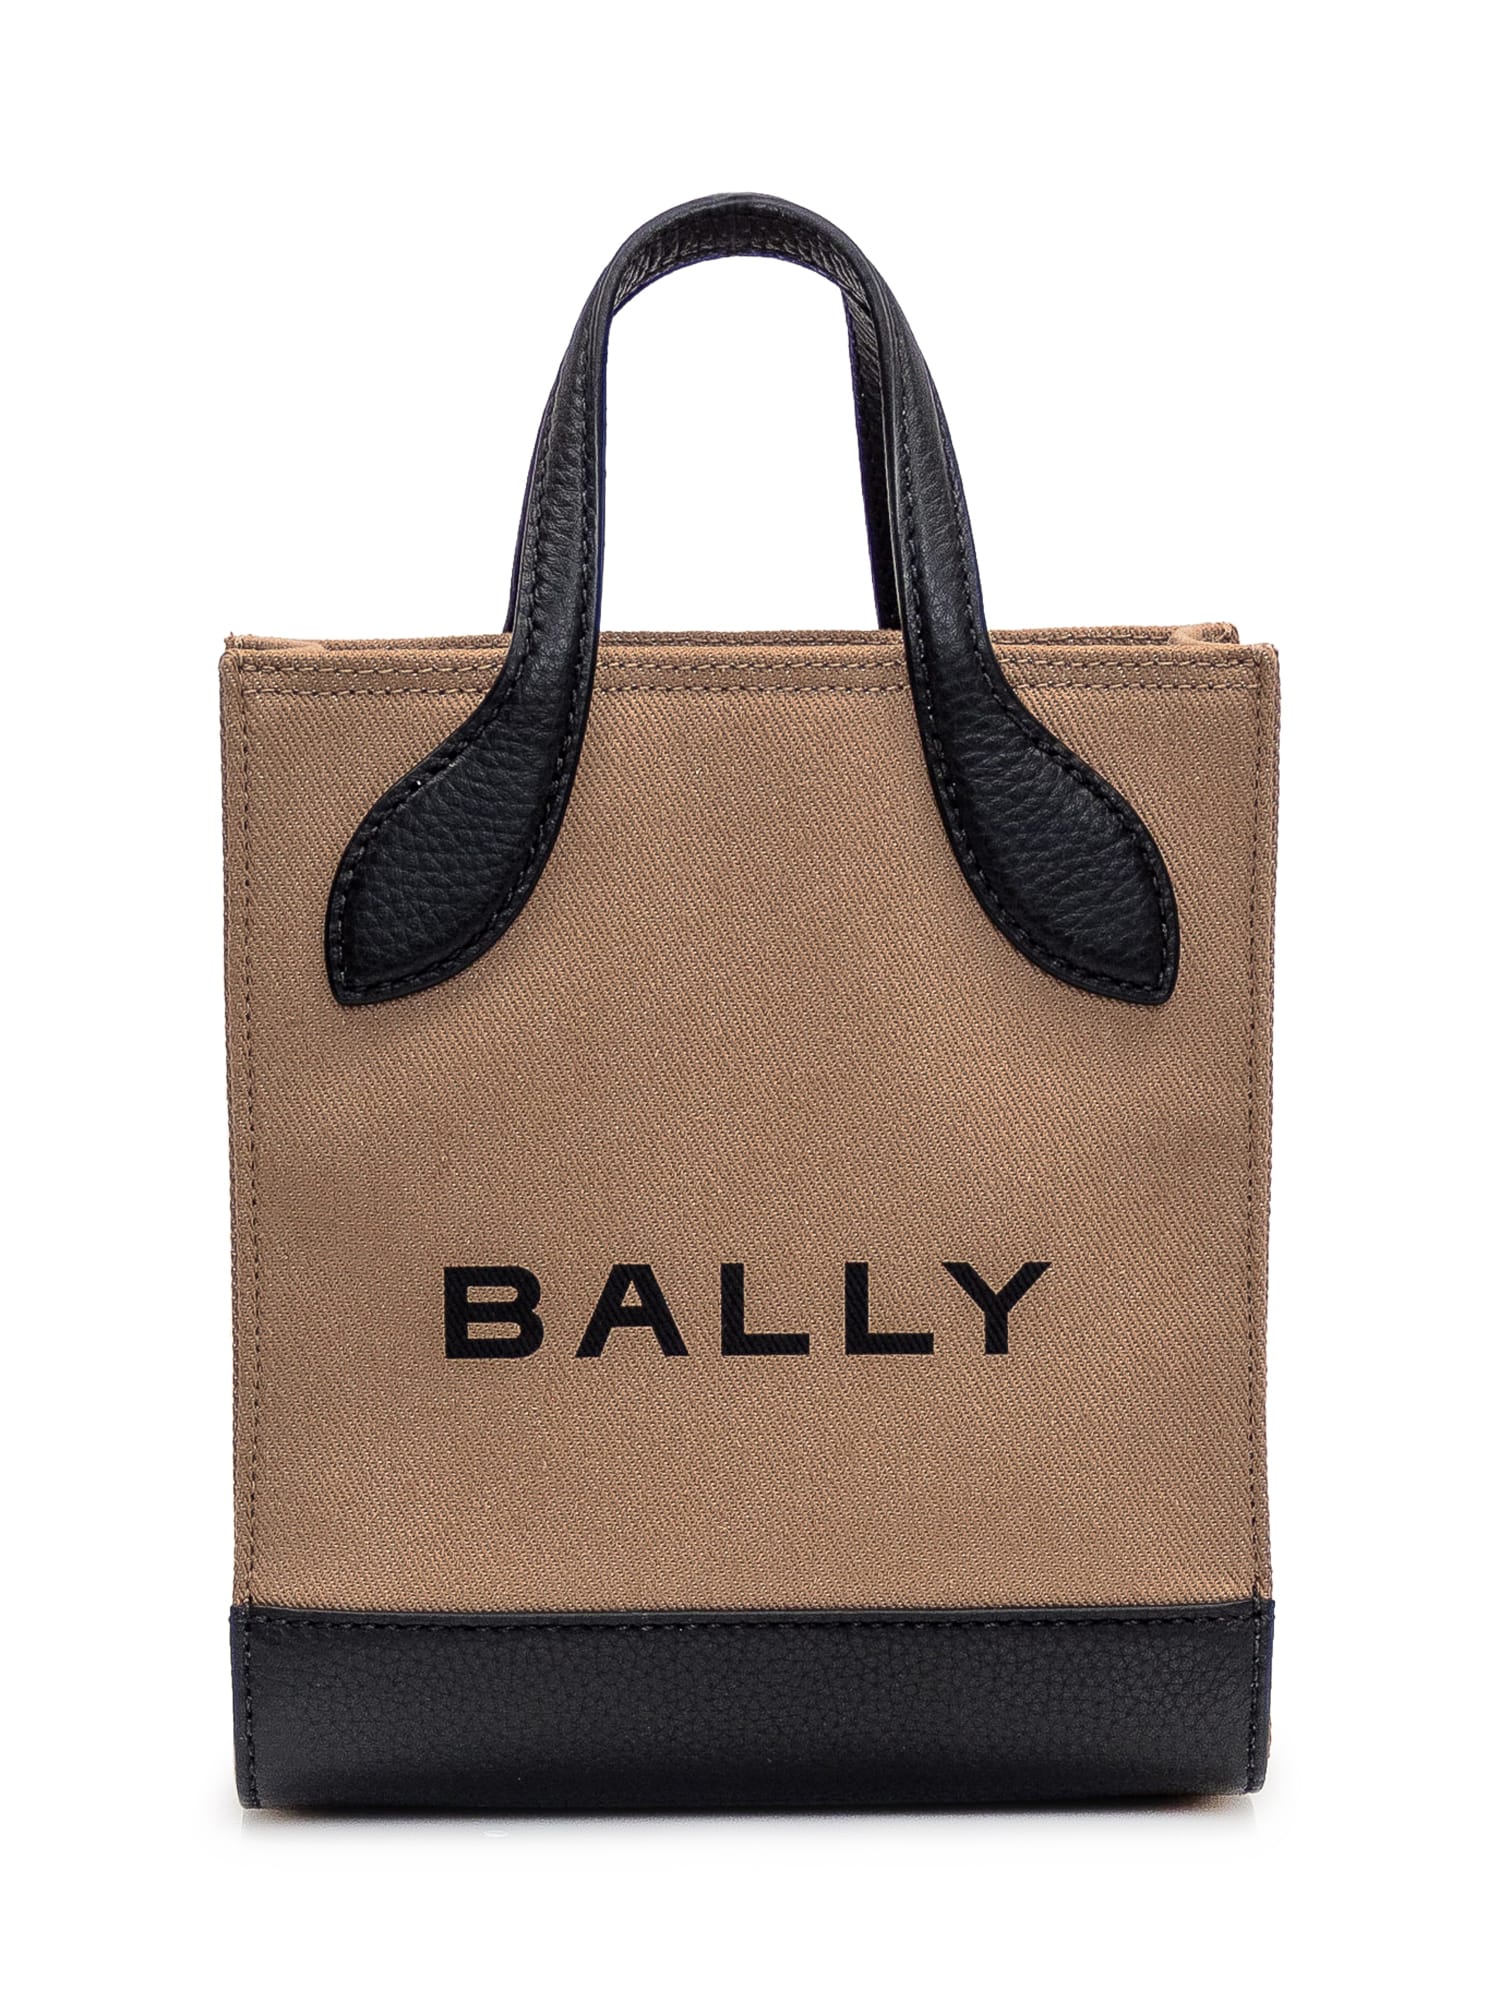 Bally Tote Mini Bag In Sand/black+oro